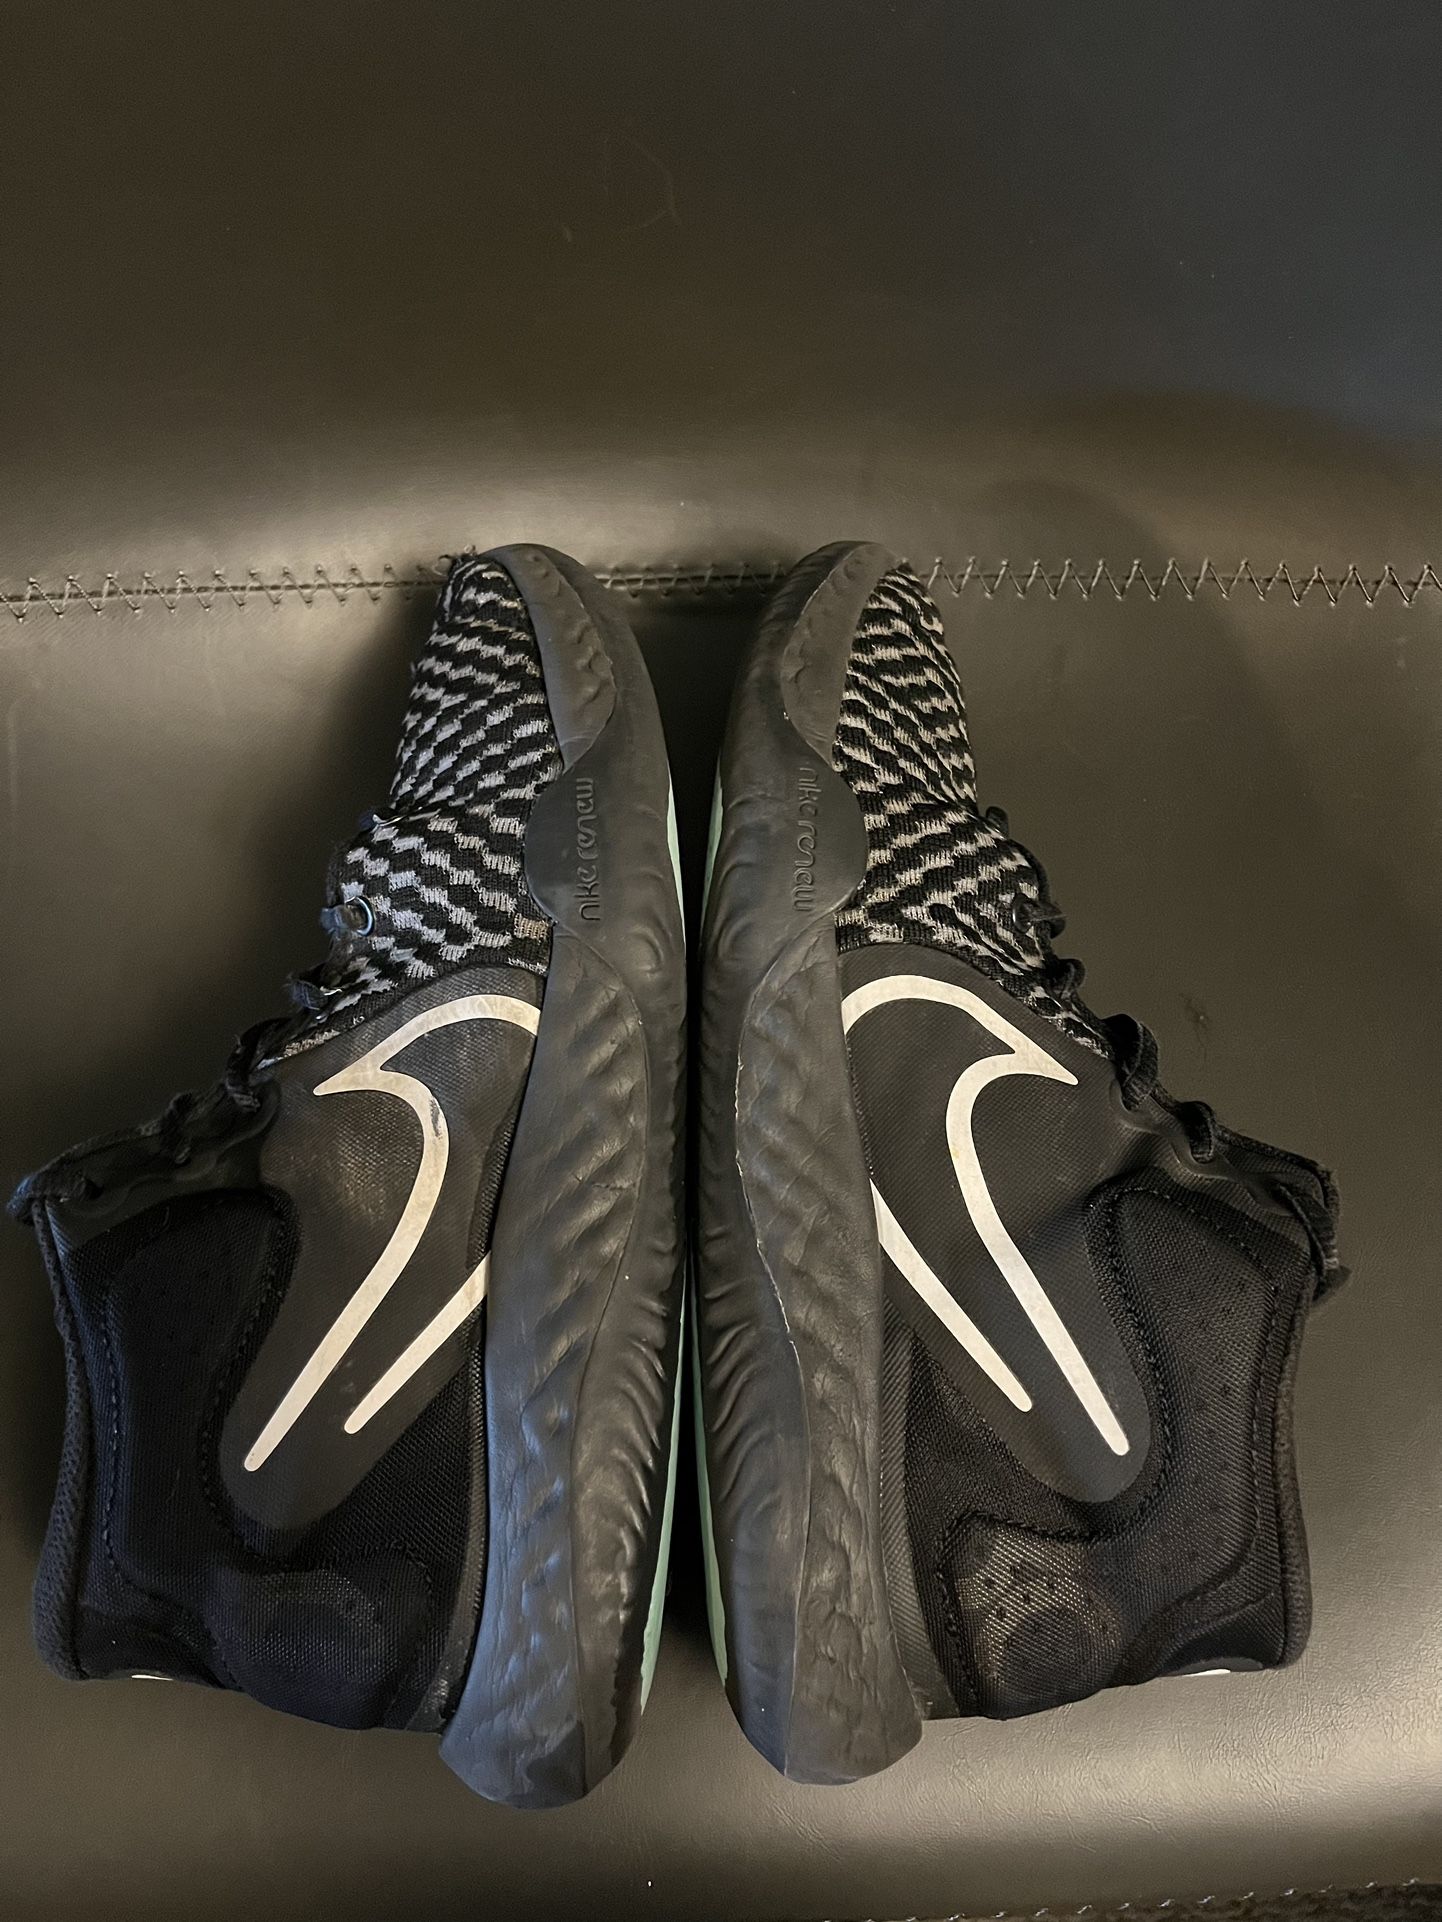 Nike KD Trey 5 VIII Smoke Gray Black 202 Size 10 Basketball Shoe